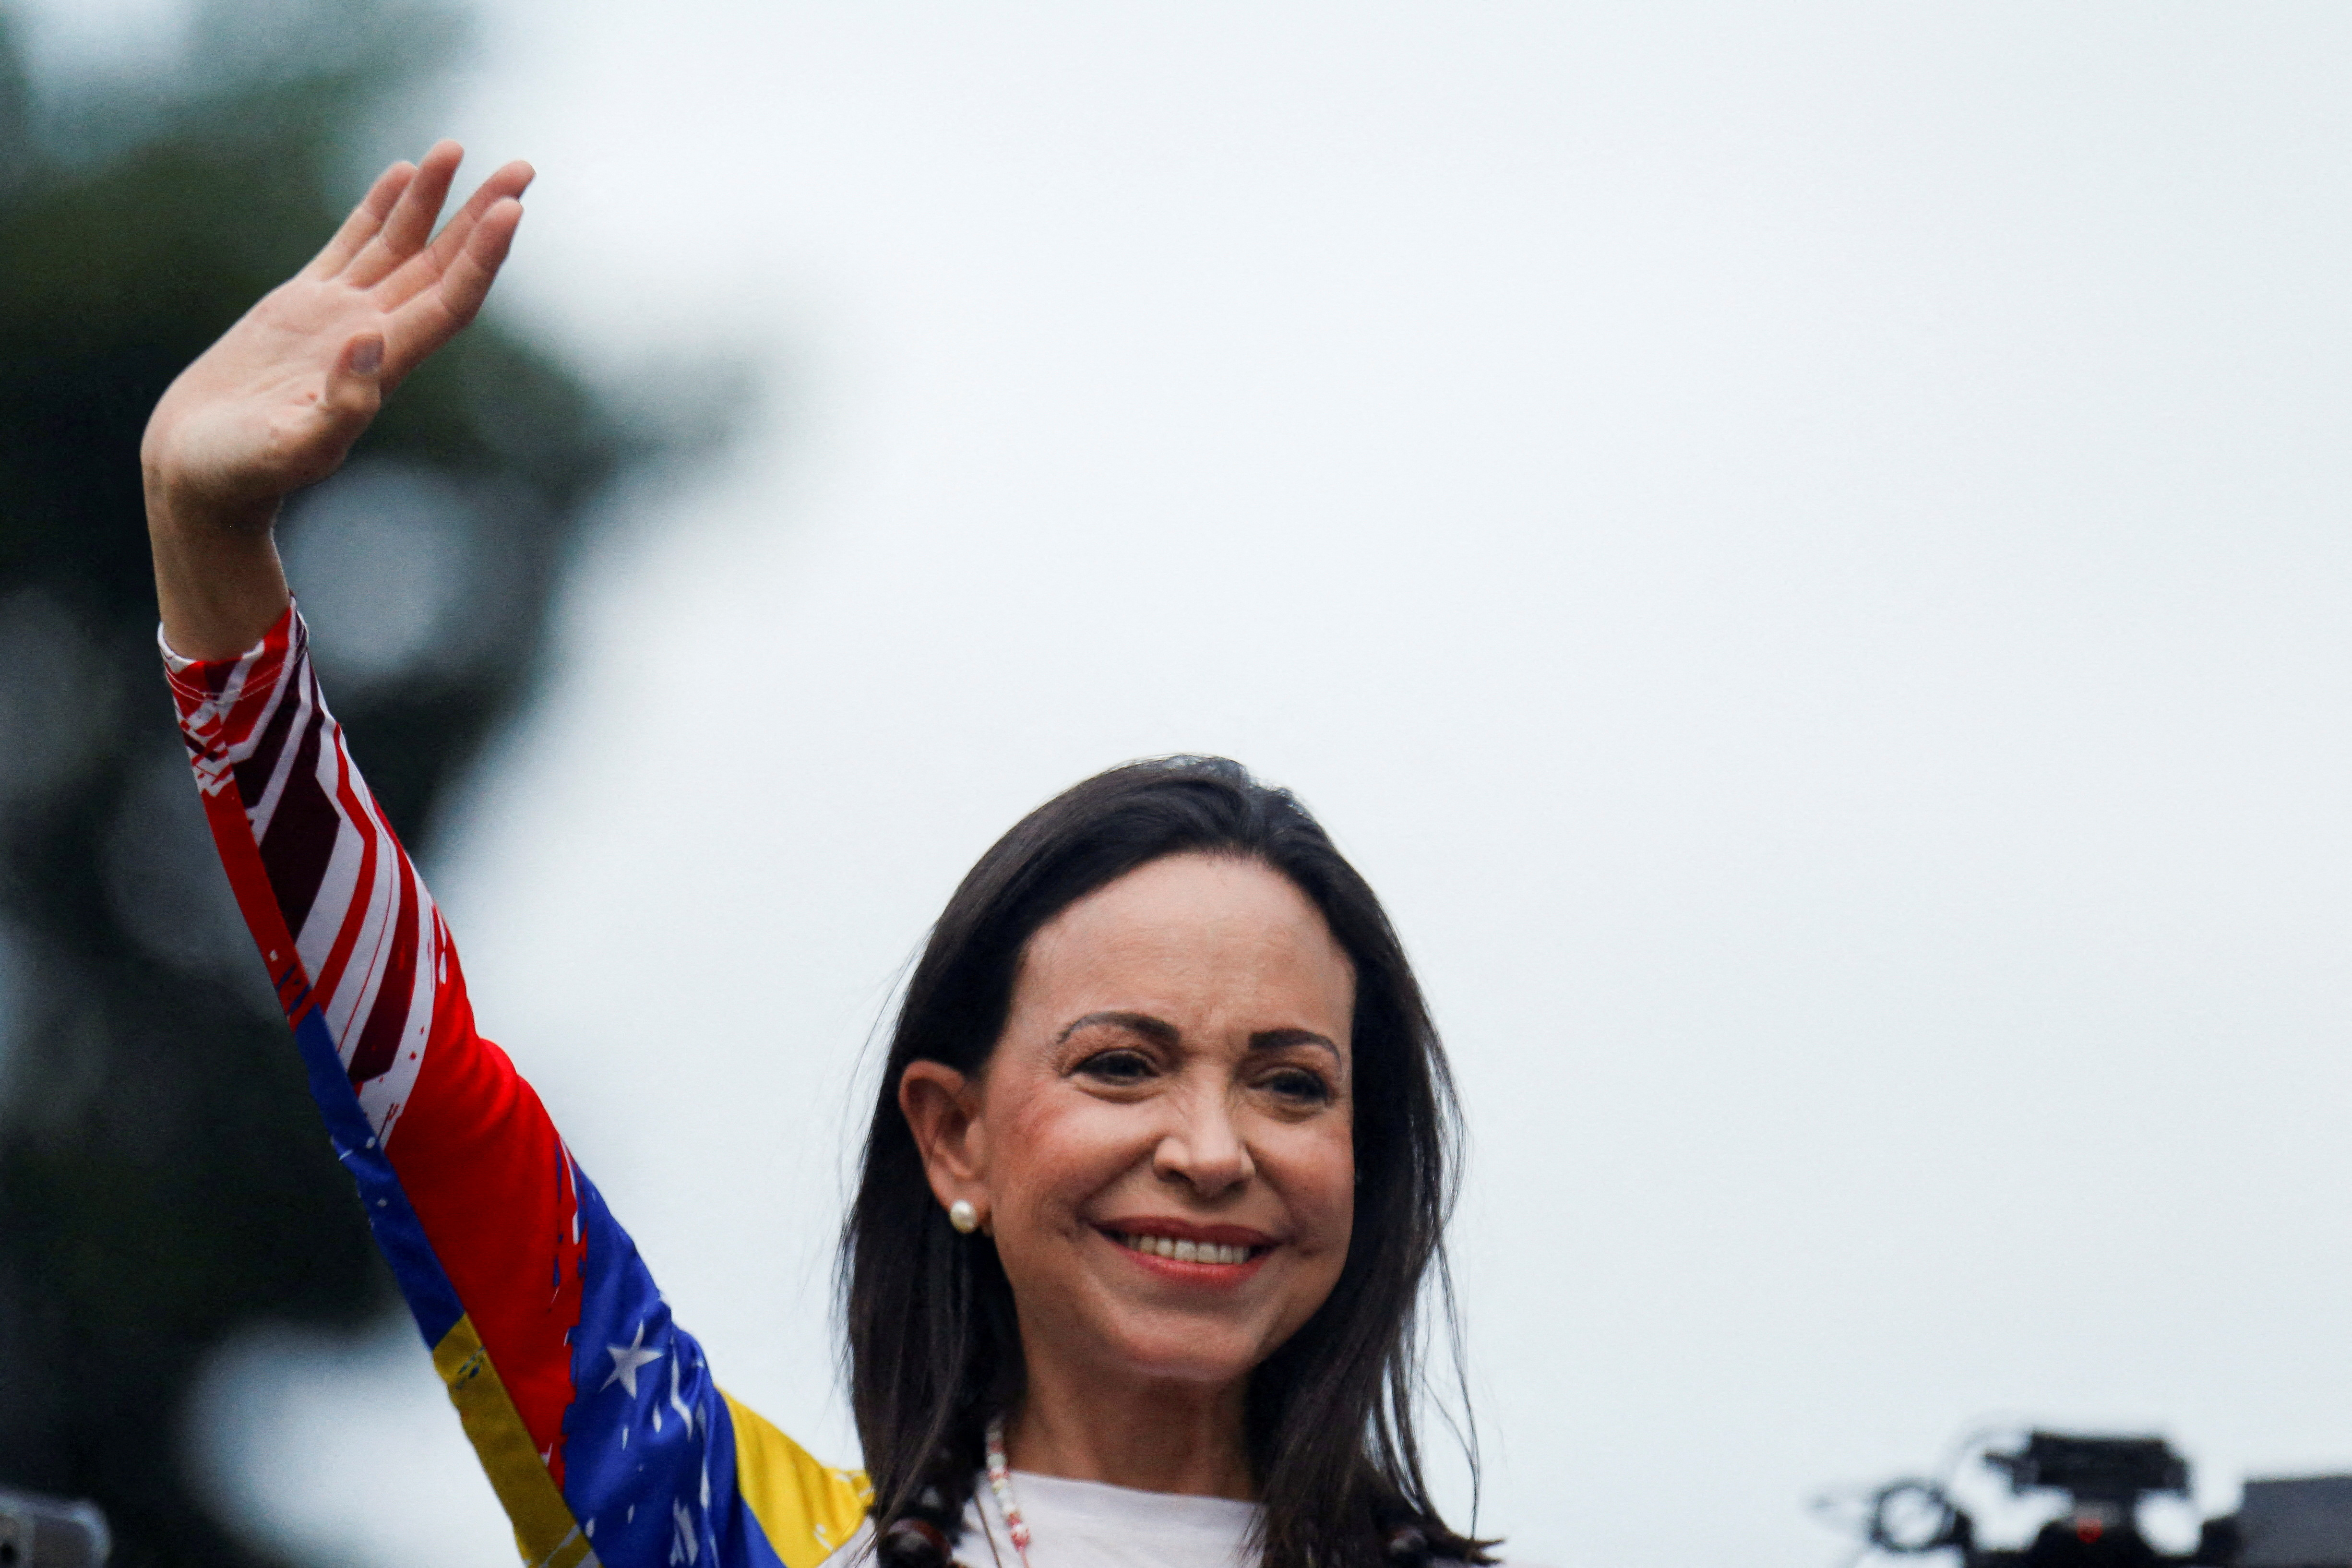 Venezuela's opposition presidential candidate Edmundo Gonzalez and opposition leader Maria Corina Machado campaign in Caracas